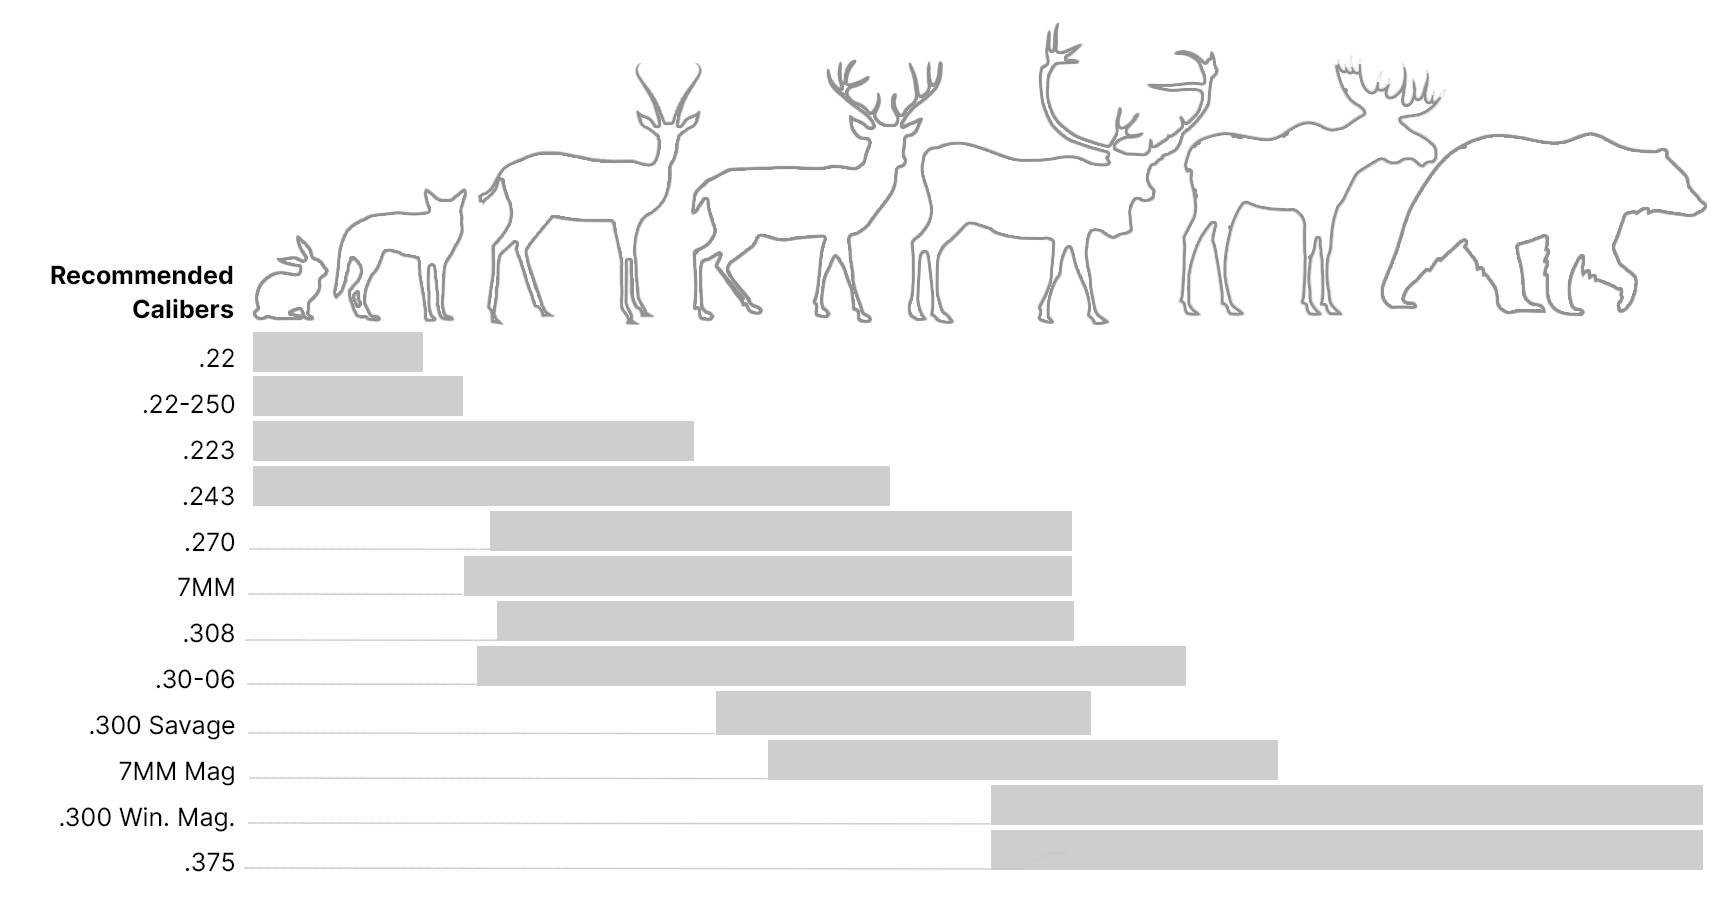 https://www.sportsmans.com/medias/hunting-caliber-bar-chart.jpg?context=bWFzdGVyfGltYWdlc3wxMjgwNjJ8aW1hZ2UvanBlZ3xoZWIvaGZmLzExNDA1MDEzMTIzMTAyL2h1bnRpbmctY2FsaWJlci1iYXItY2hhcnQuanBnfDU1MDlkZjRhYmNhZTc2MTBmYTNhZDNkMzg2YWQ5YjRhZWMwODQ3NjMxNzdmOTBjYjE0MDVkYmEzNDE5ZjYzZmQ